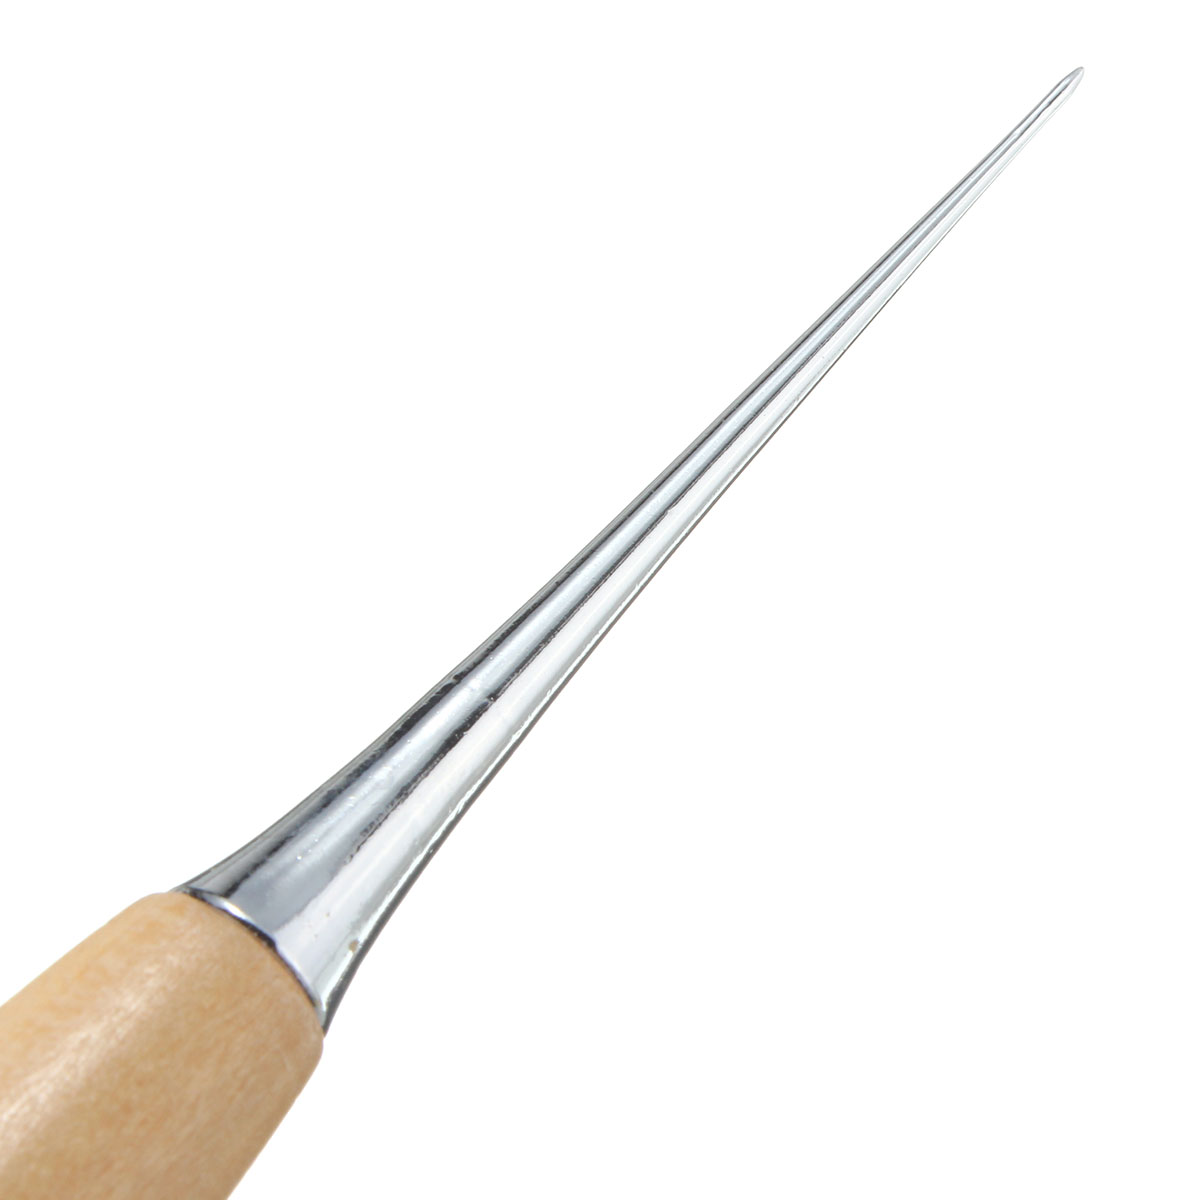 Leather-Craft-Hand-Awl-Punch-Wood-Stick-Tool-Polishing-DIY-Tool-1090360-6